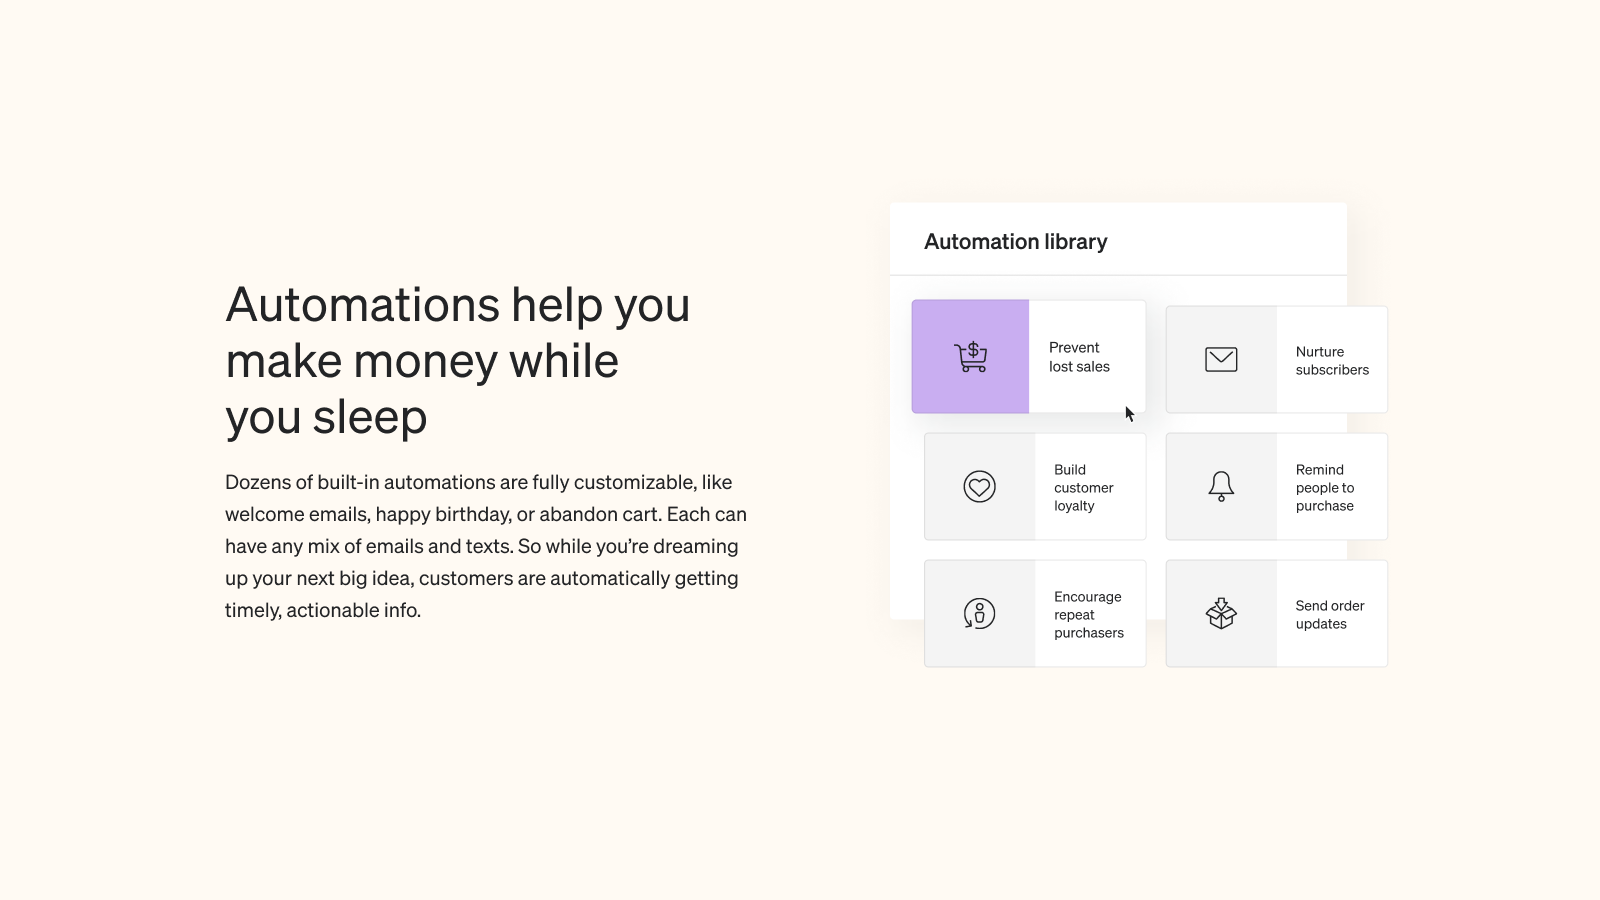 Automations help you make money while you sleep